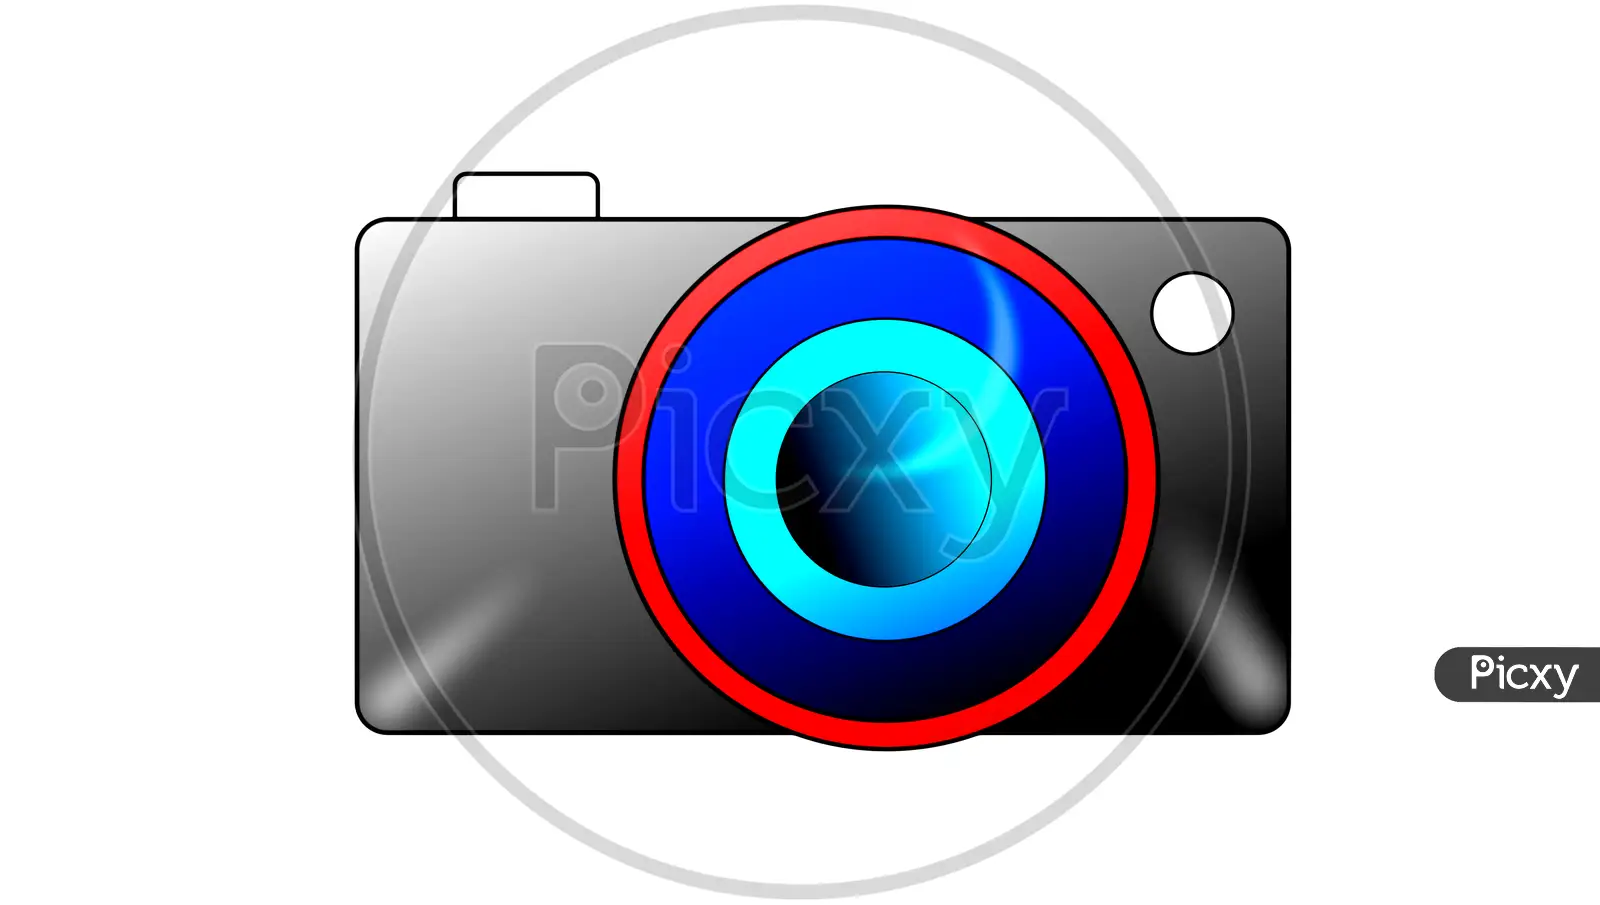 snapshot camera clipart images